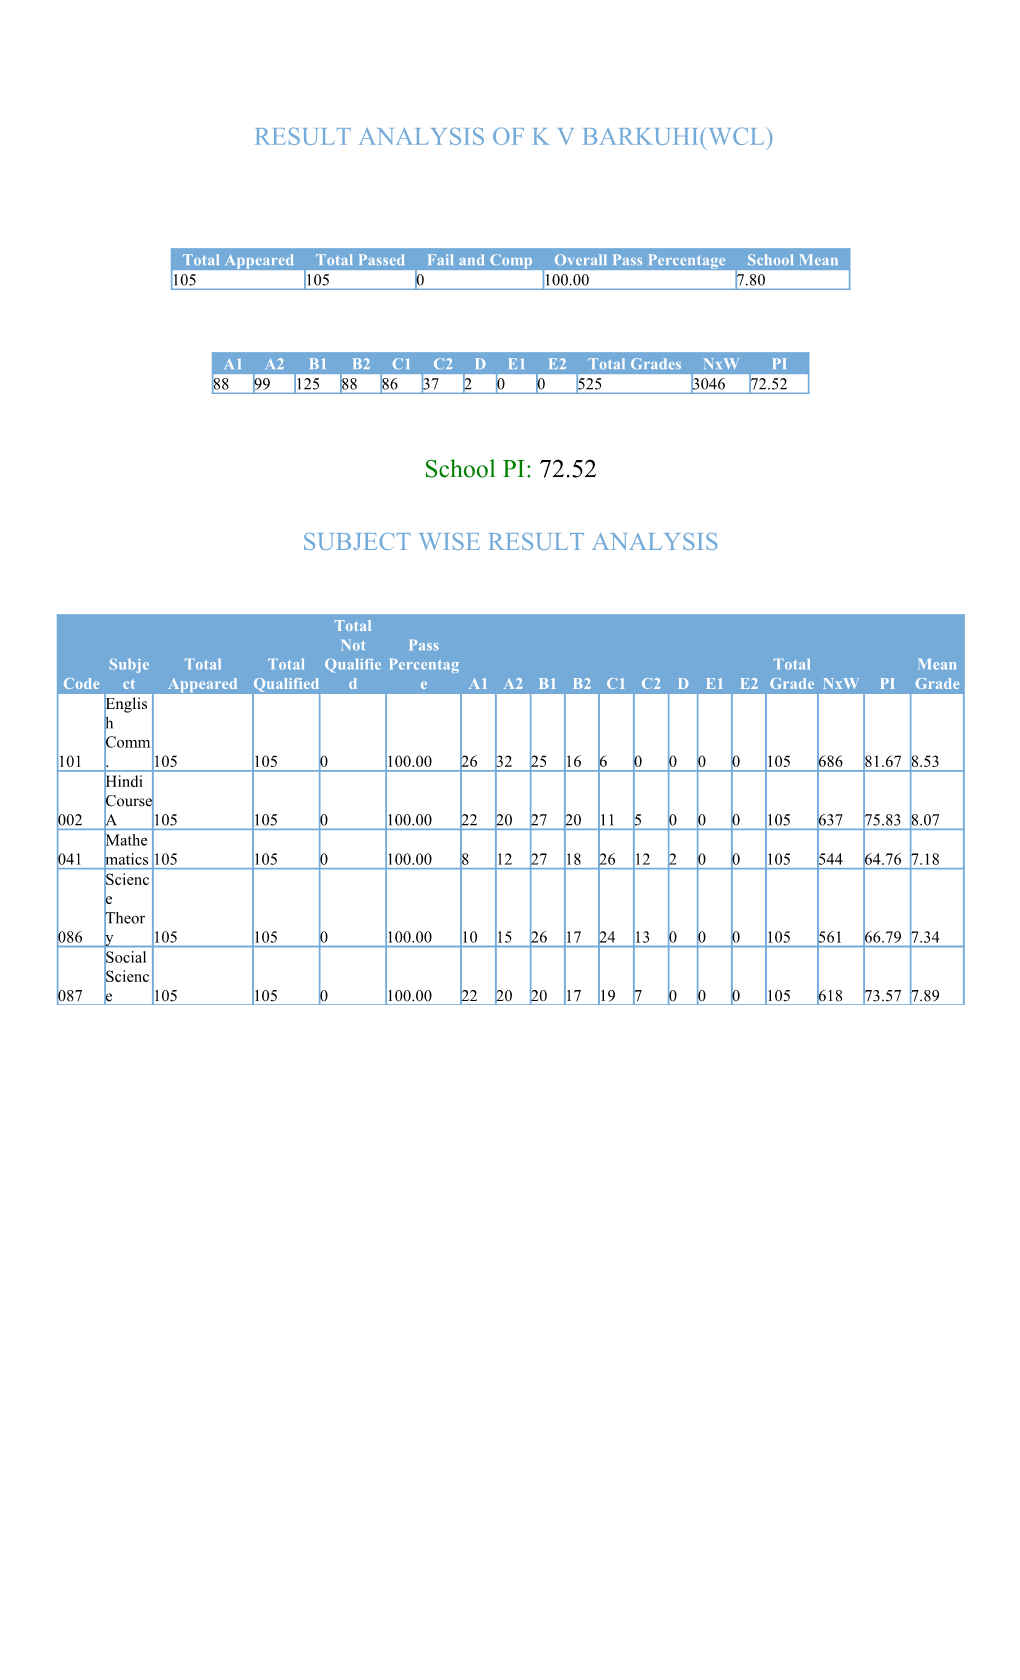 Result Analysis of K V Barkuhi(Wcl)